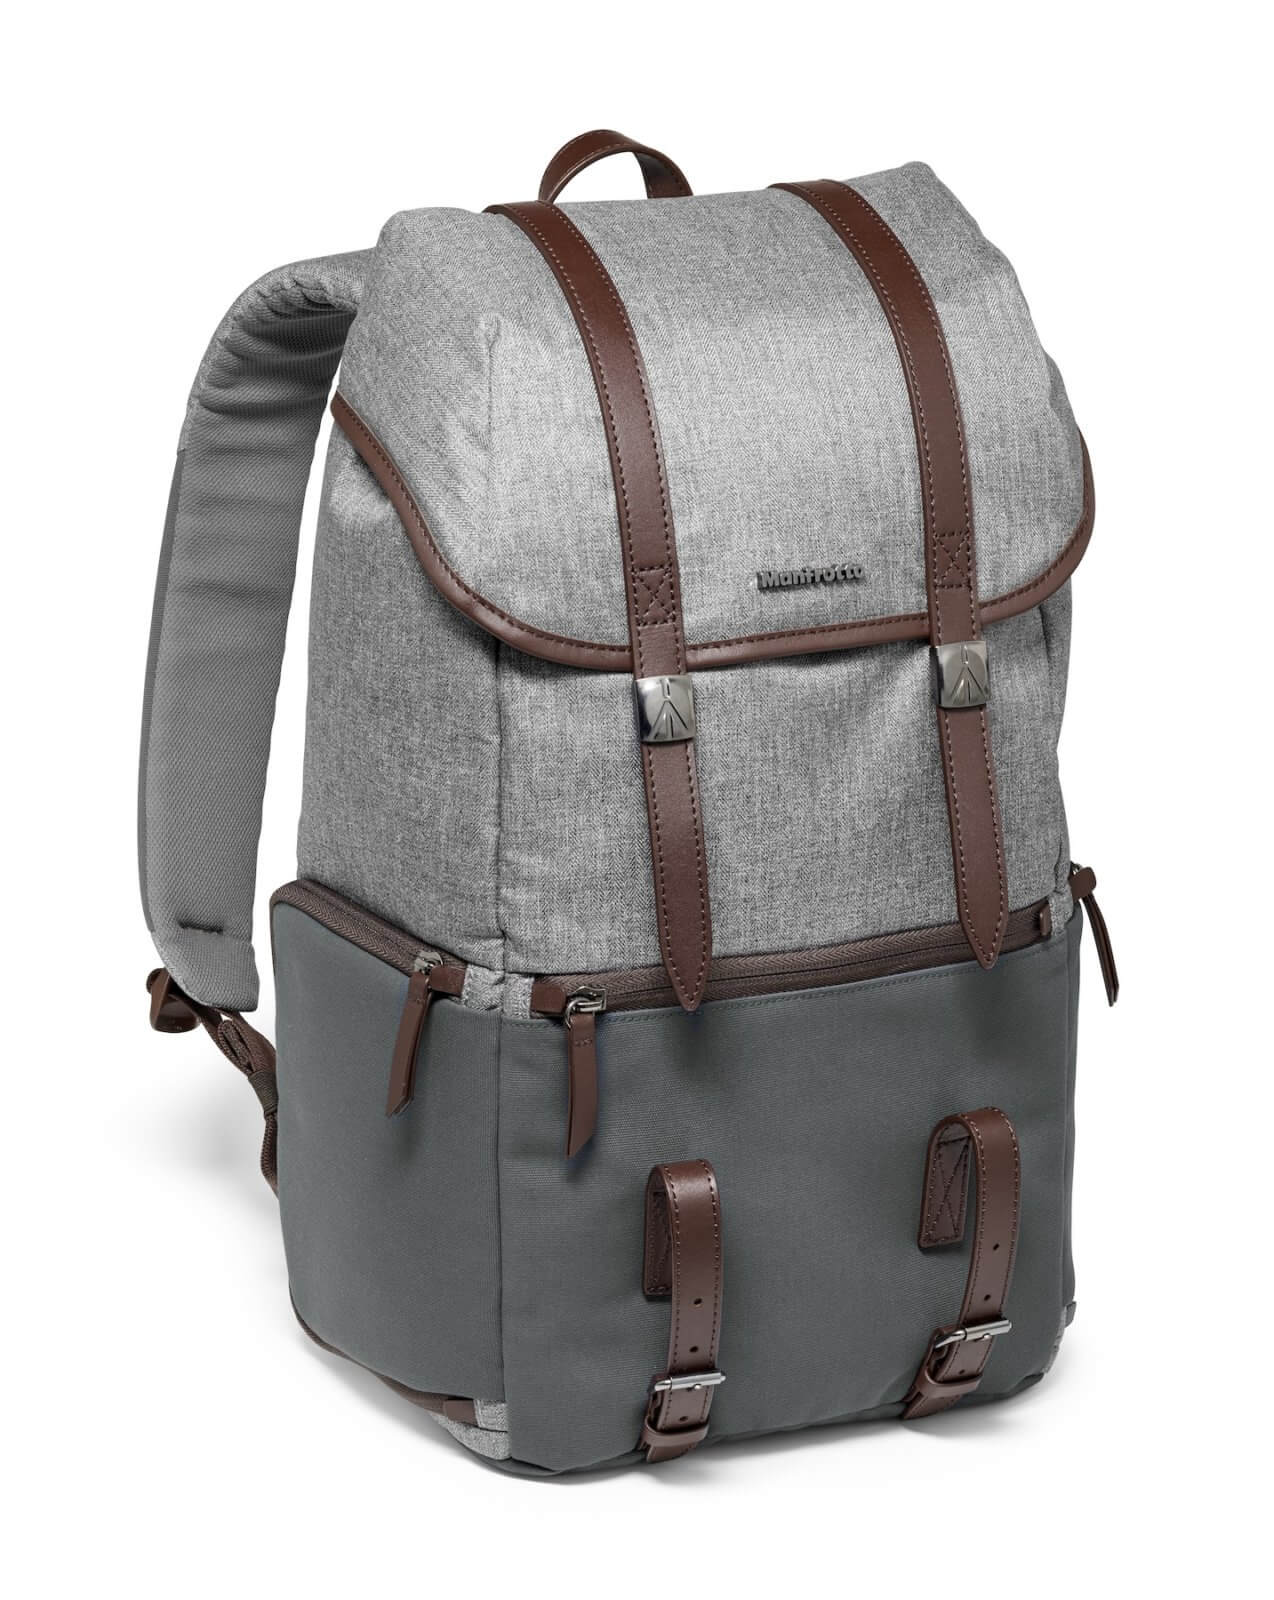 Manfrotto Windsor backpack